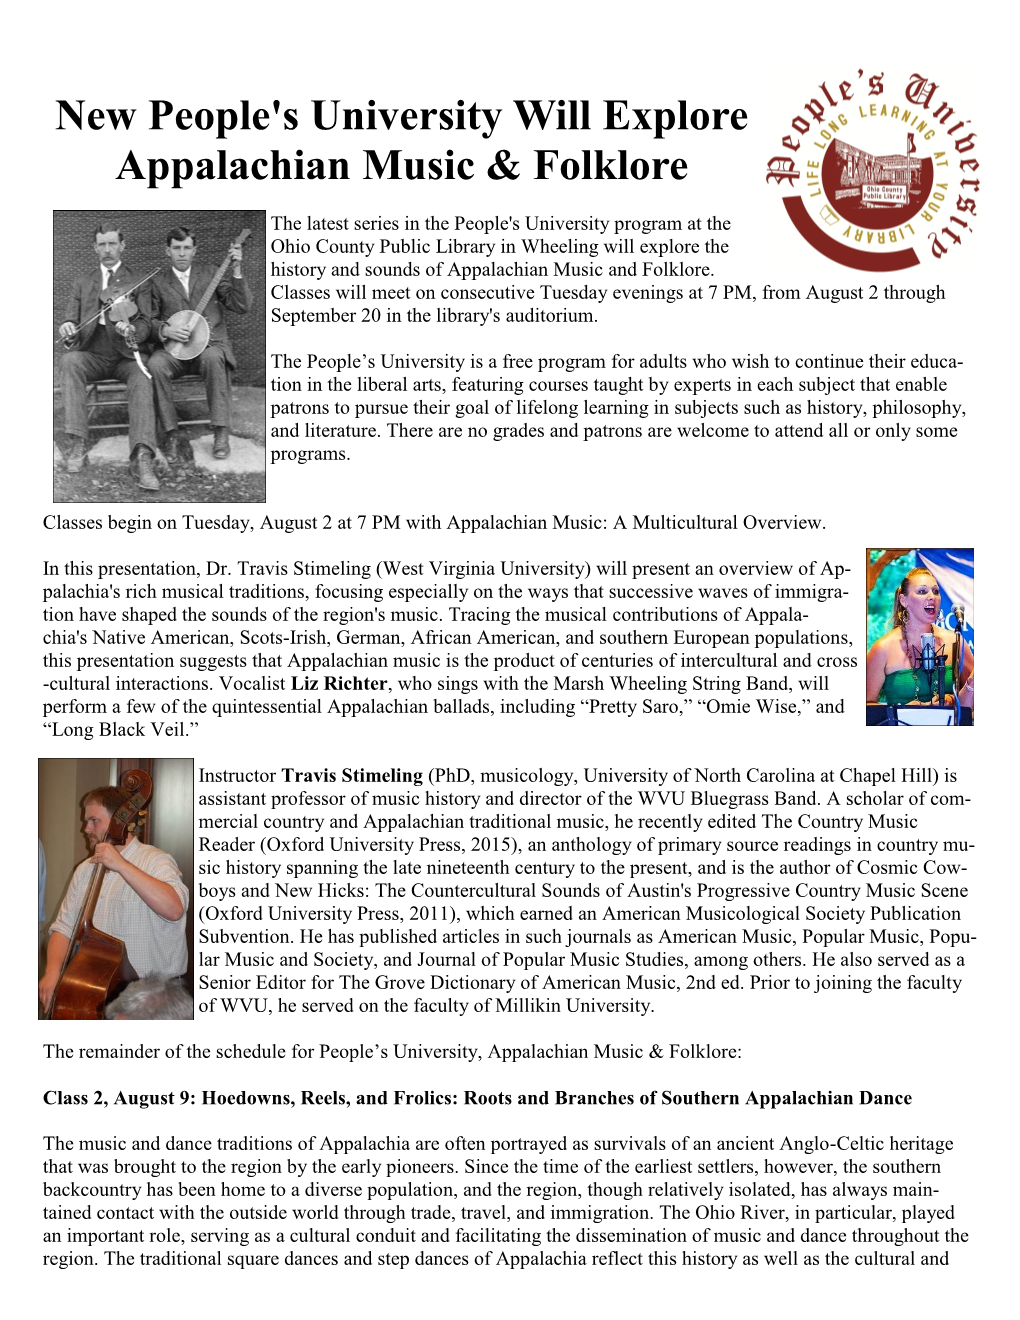 New People's University Will Explore Appalachian Music & Folklore